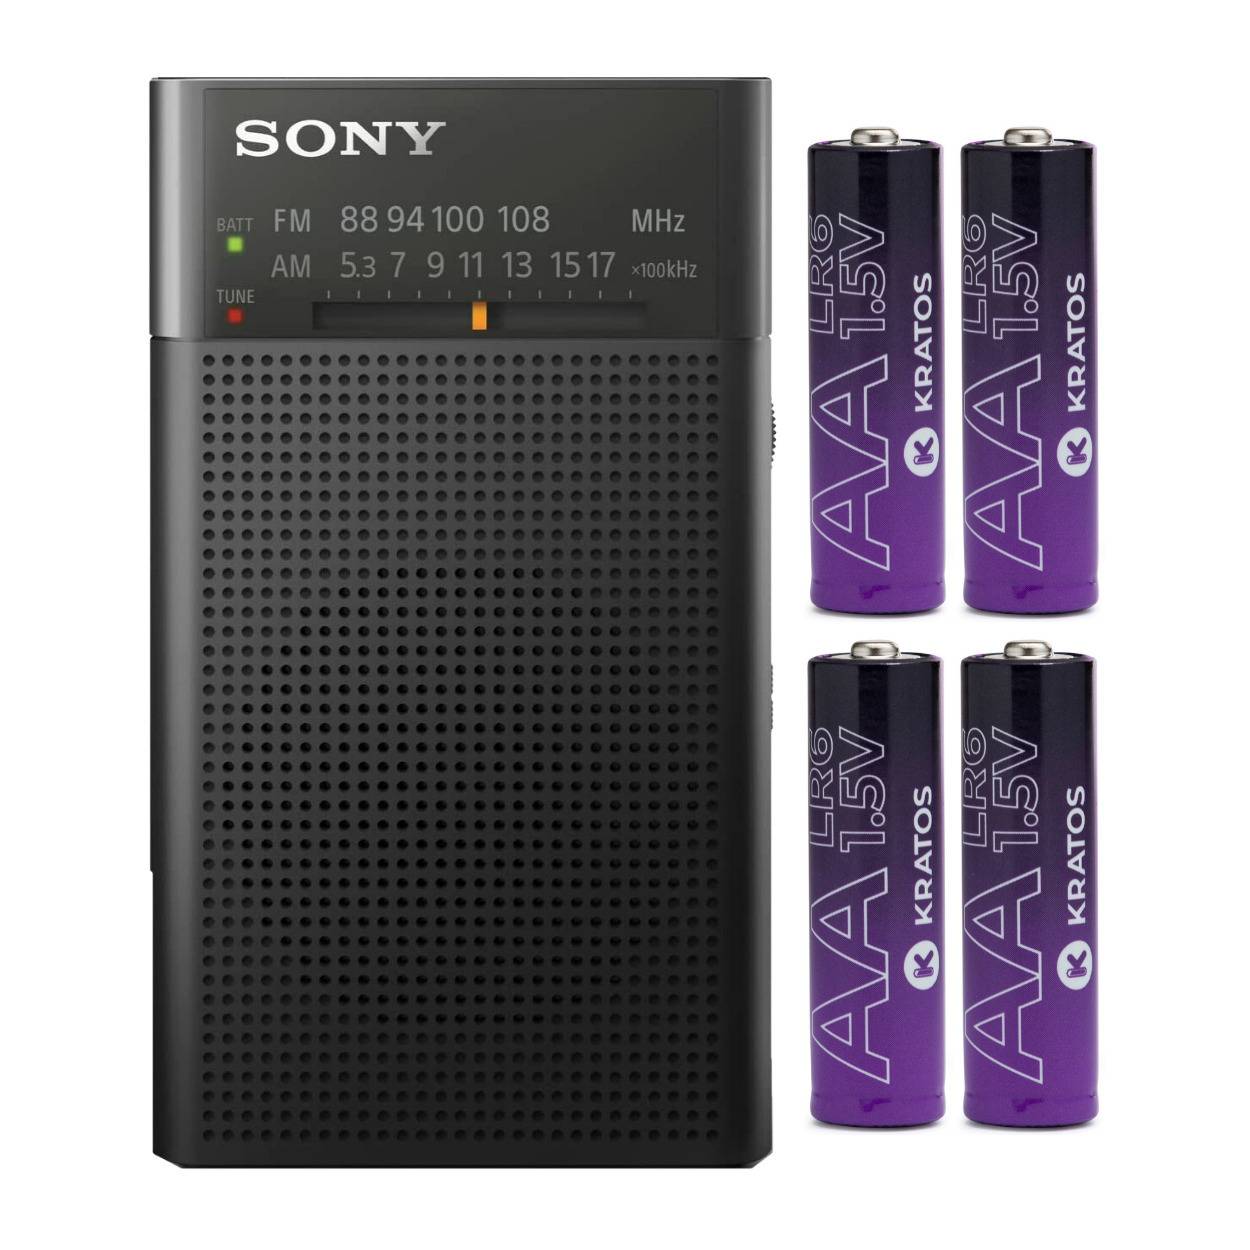 Sony ICFP27 Portable AM/FM Radio with Speaker (Black) with Kratos Power 4-Pack AA Alkaline Batteries